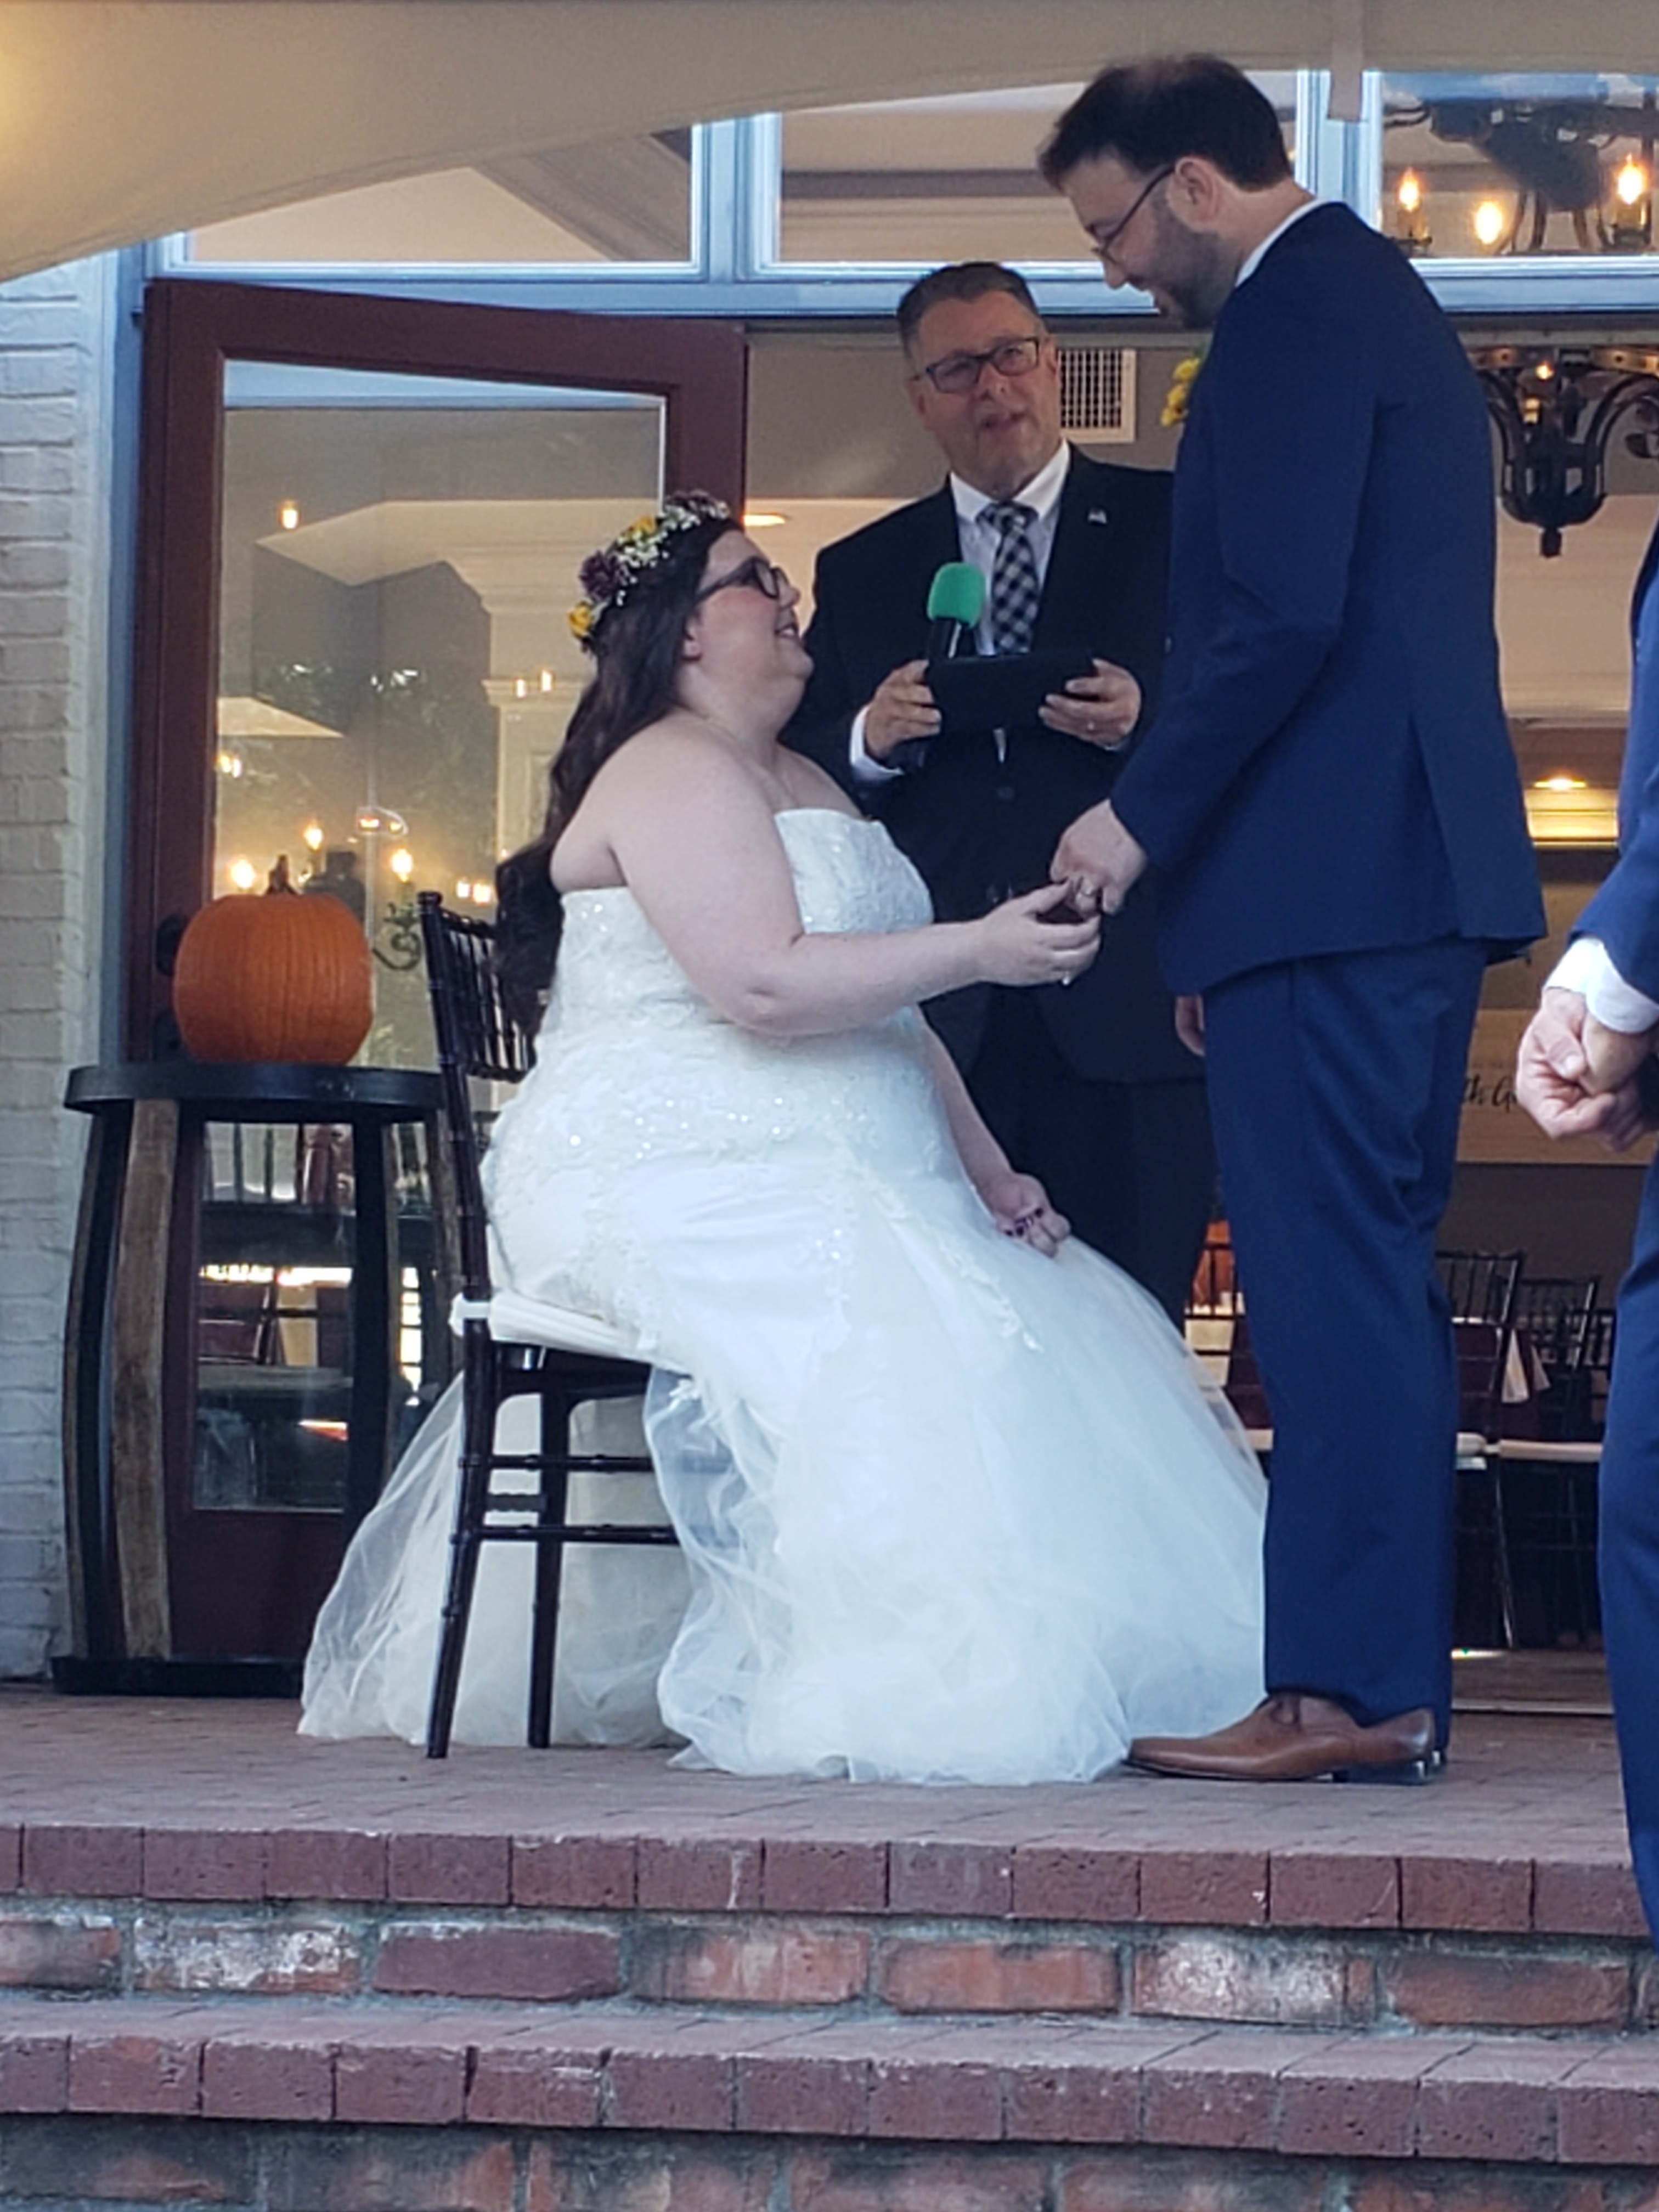 Kevin and Cassie wedding celebration, October 5, 2019